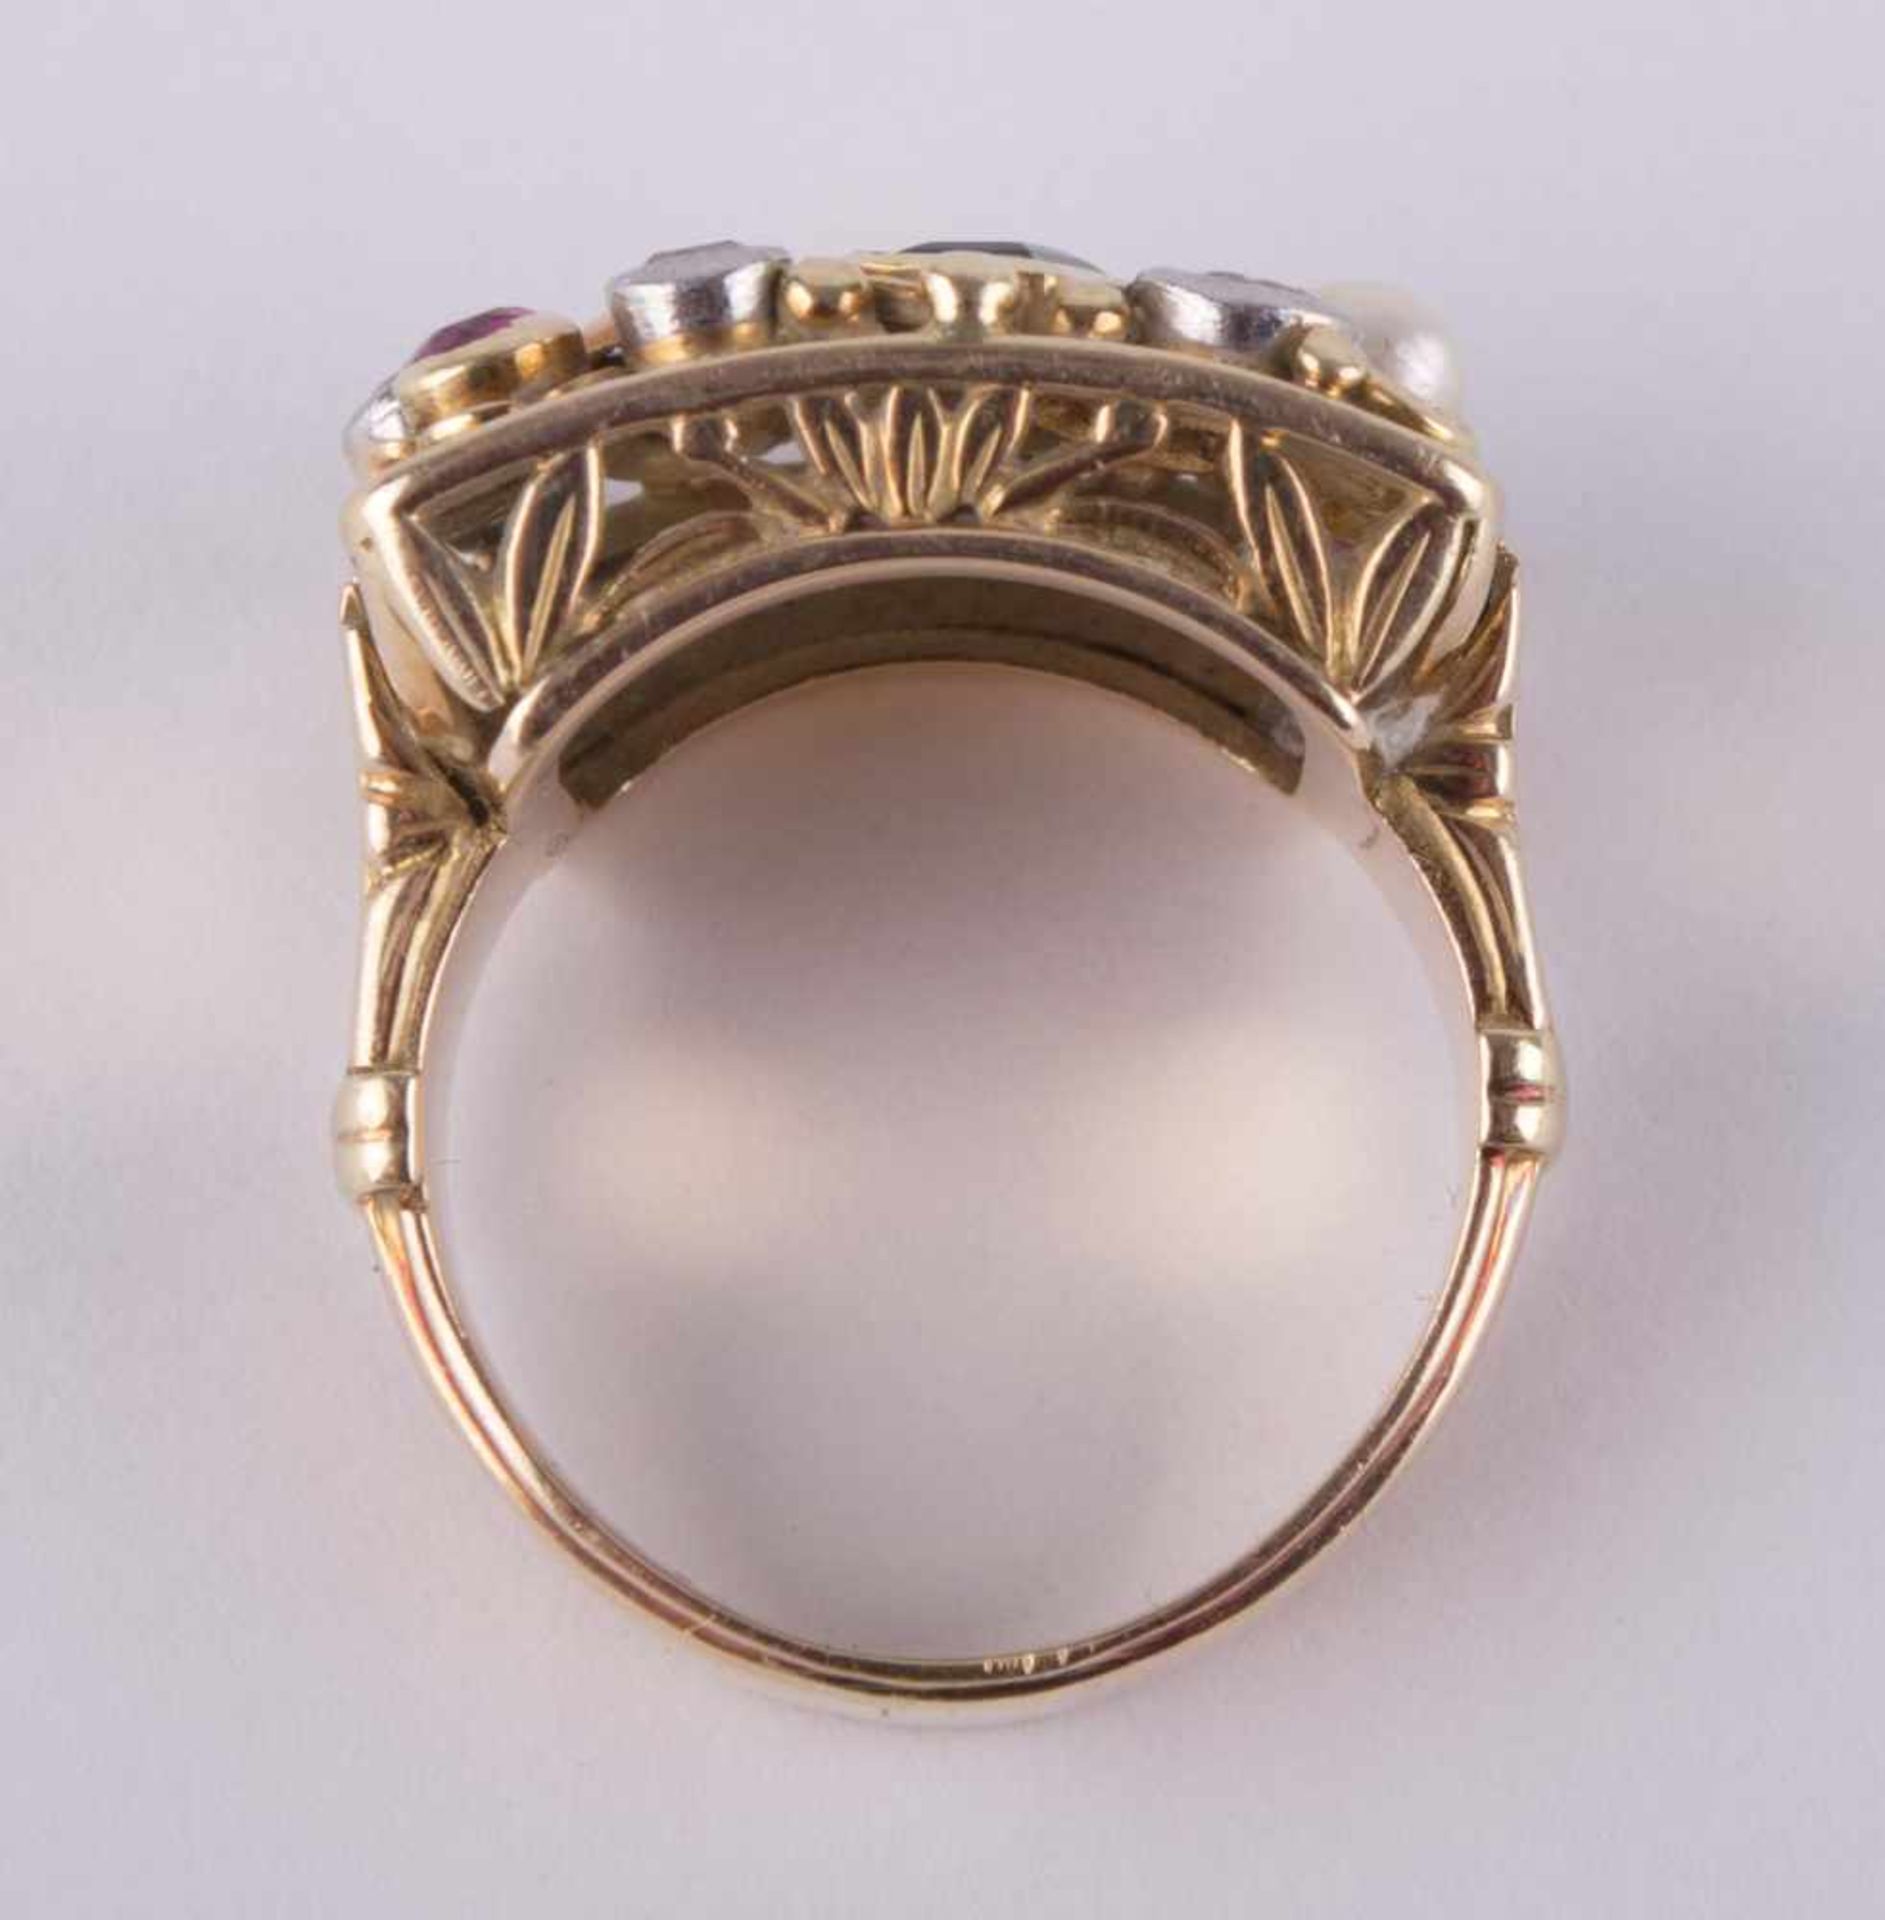 Herren/Damen-Ring / Men´s/Women´s Ring GG 585/000, sogenannter Gemüsering, besetzt mit 5 Diamanten - Image 4 of 6